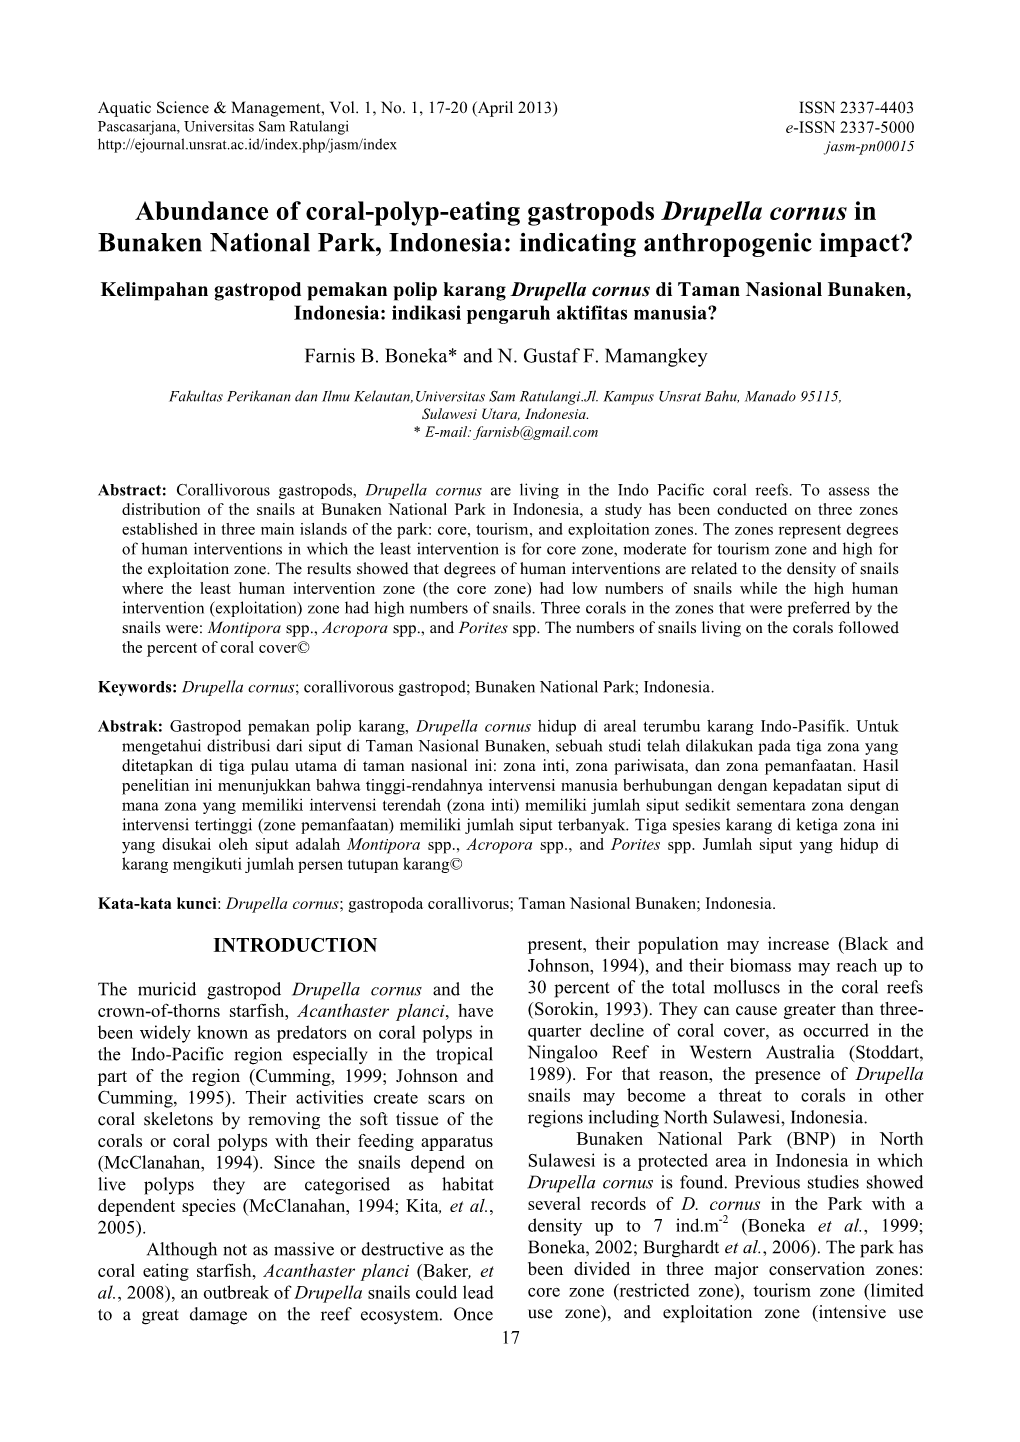 Abundance of Coral-Polyp-Eating Gastropods Drupella Cornus in Bunaken National Park, Indonesia: Indicating Anthropogenic Impact?